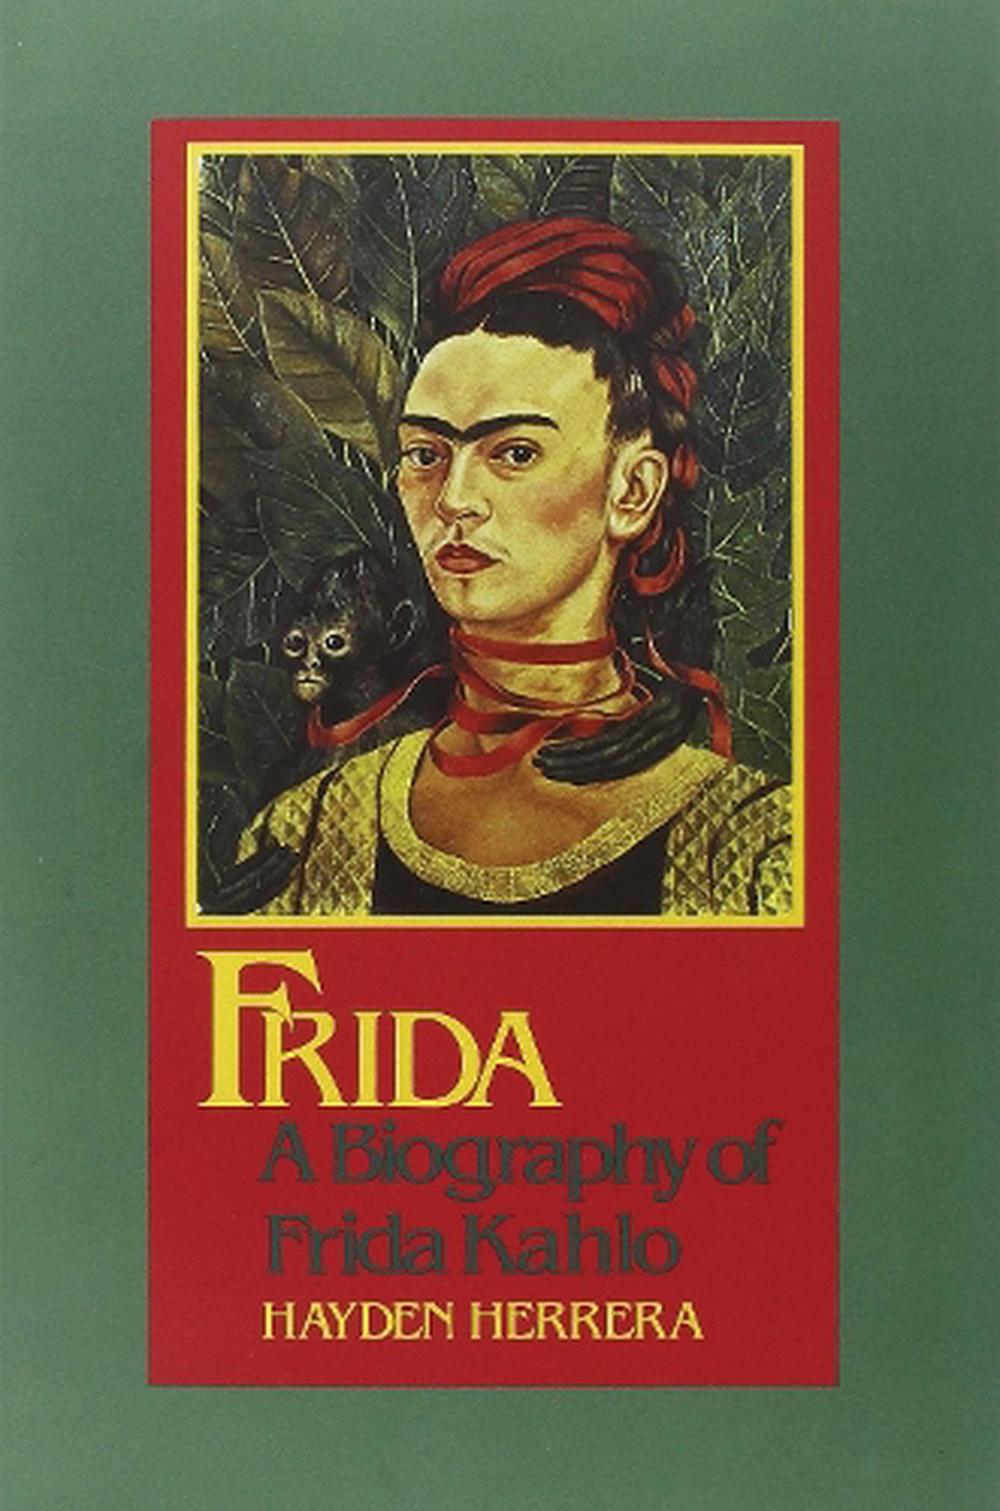 frida kahlo biography books